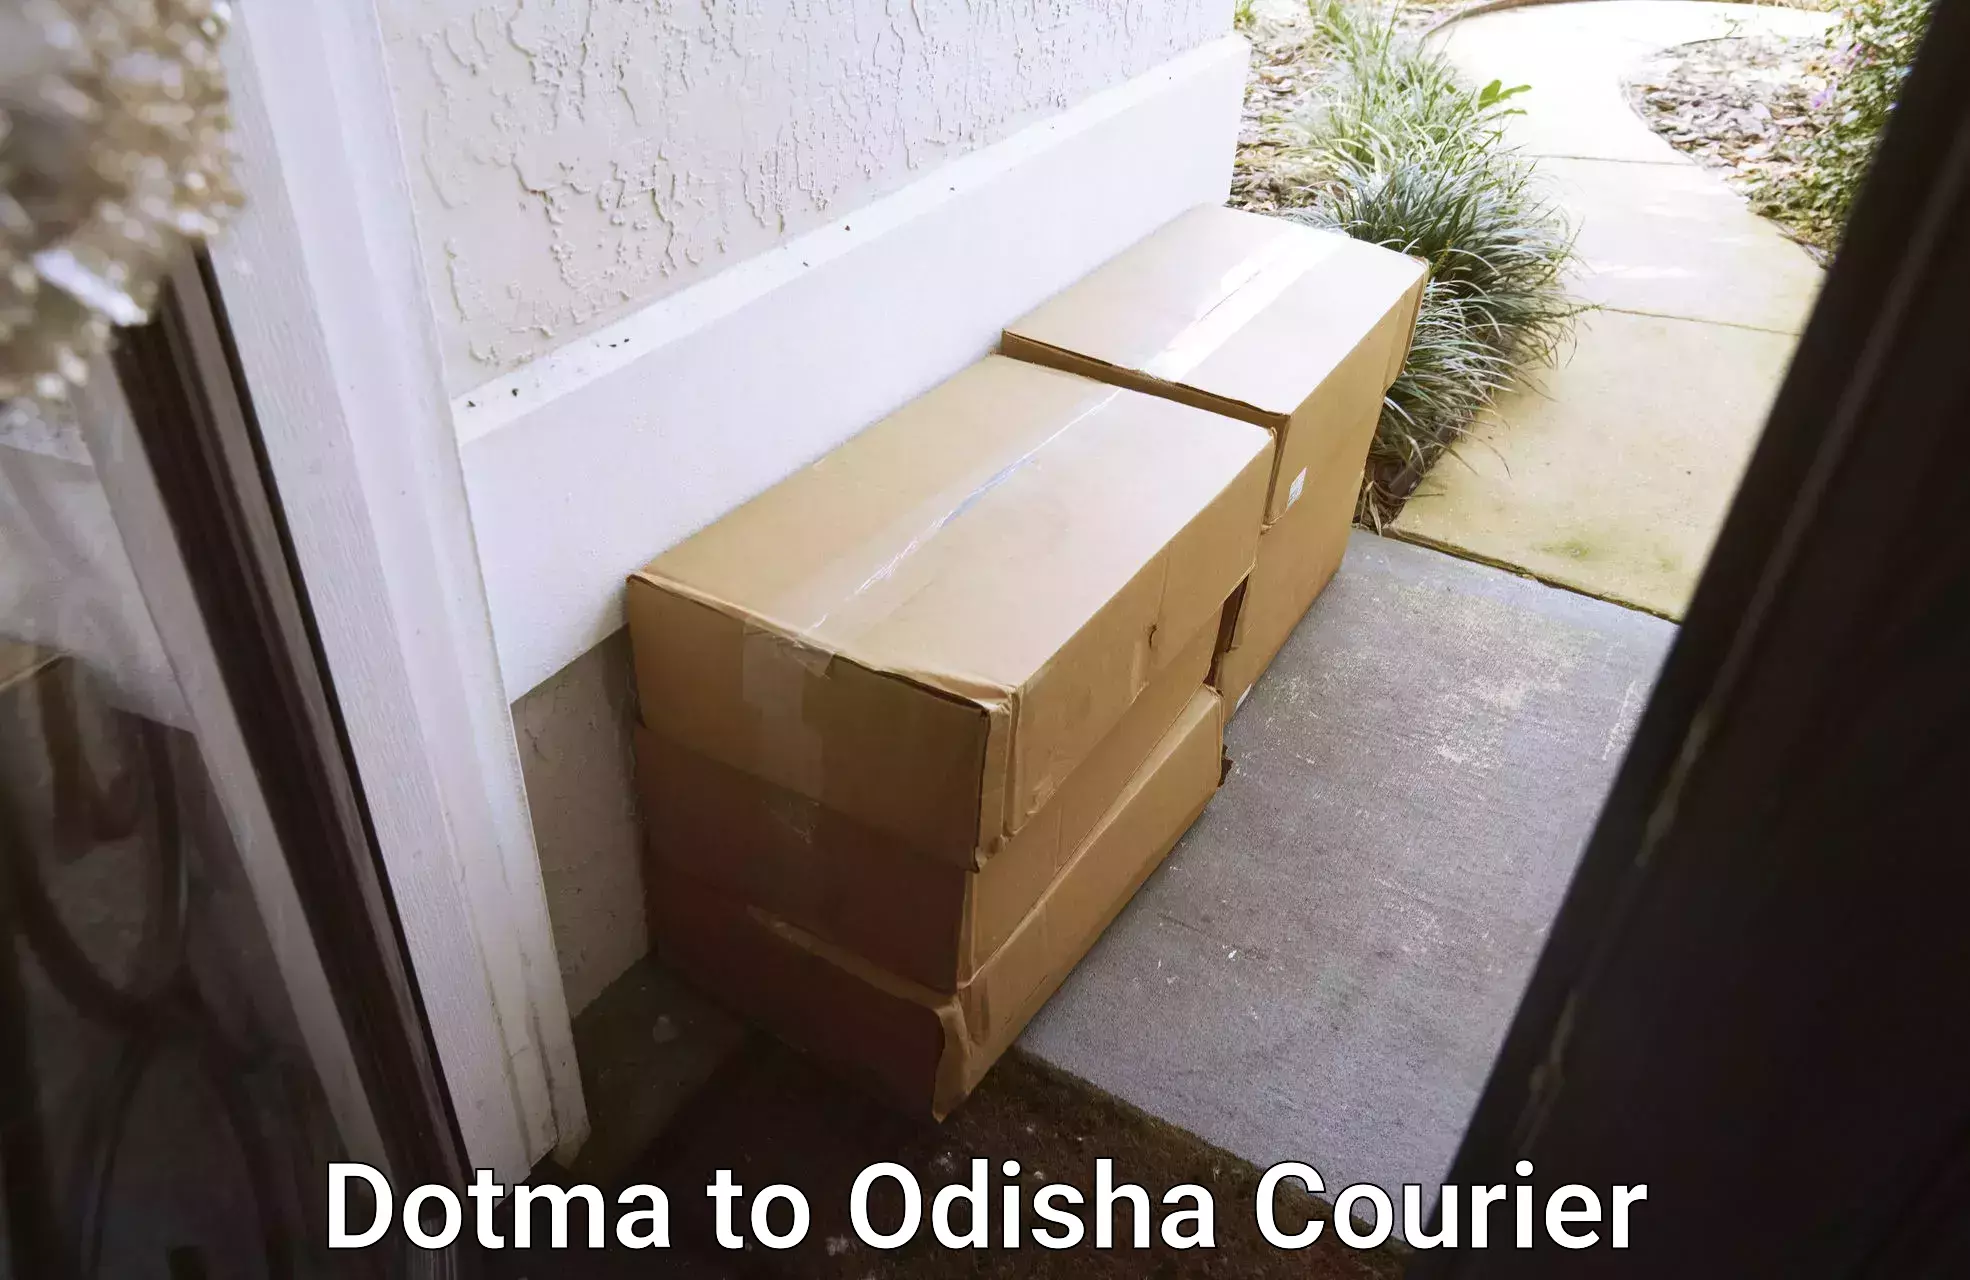 Courier service innovation Dotma to Balikuda